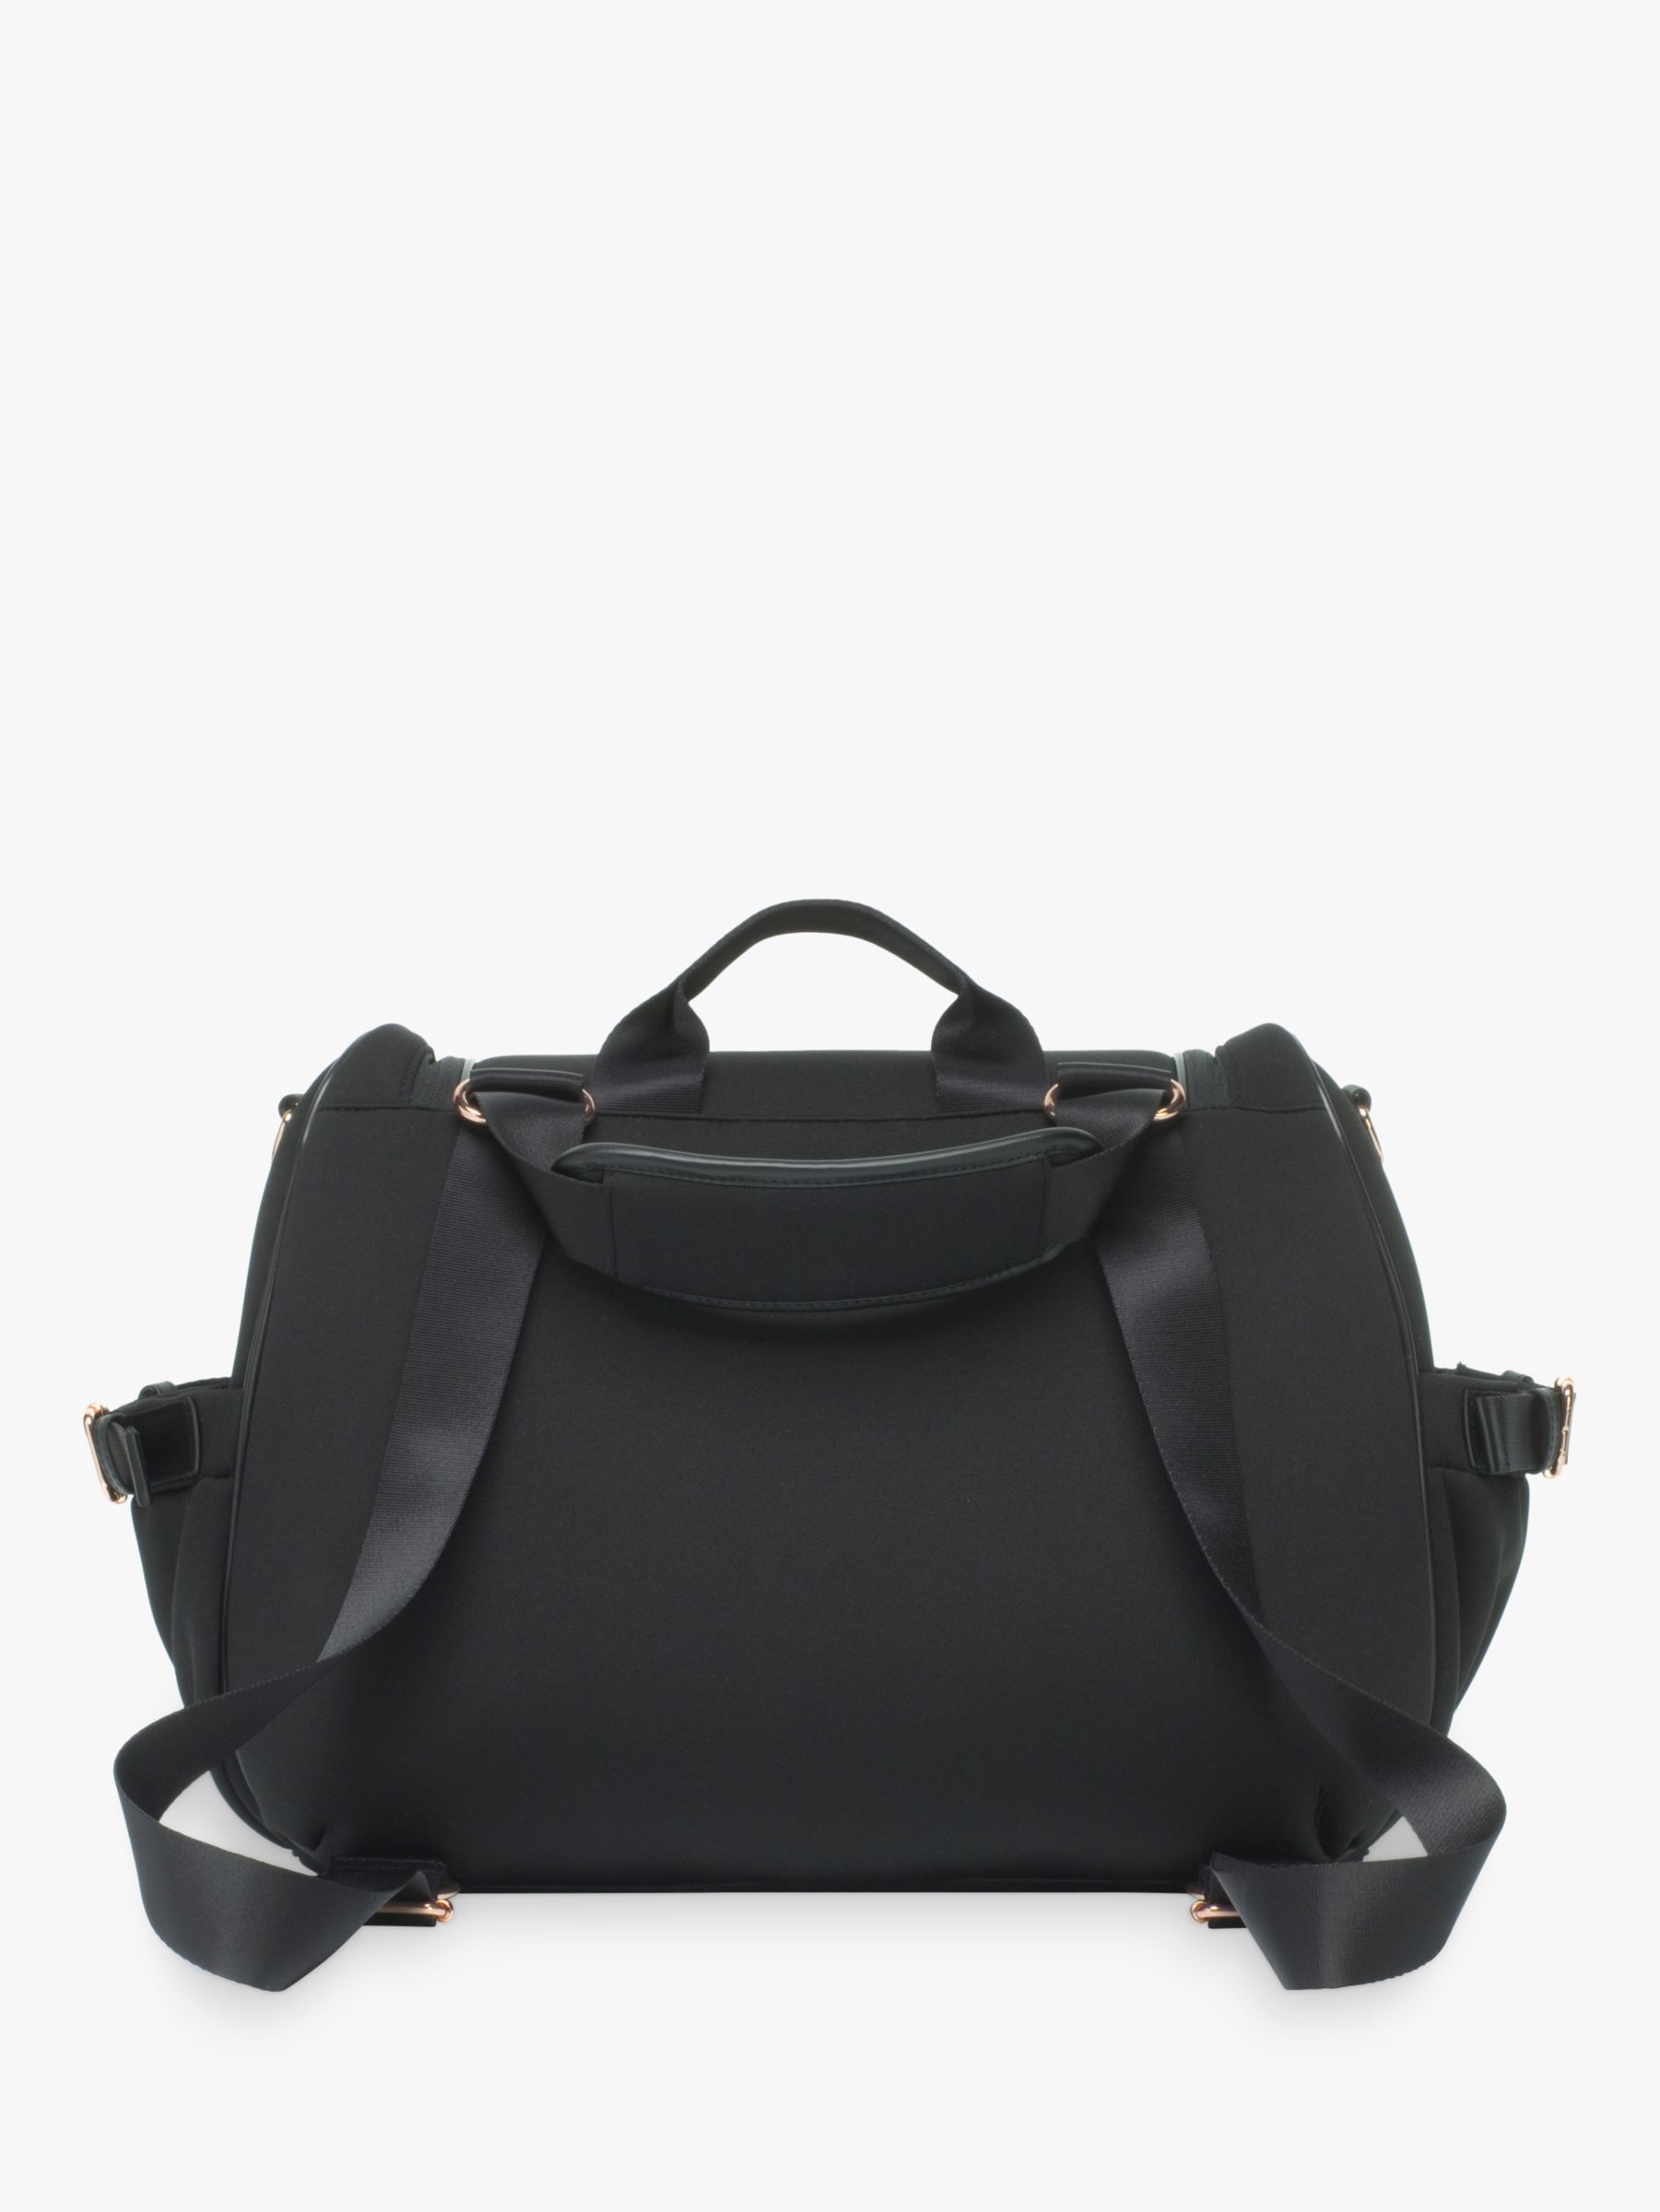 Storksak Poppy Luxe Black  Convertible Changing Bag 